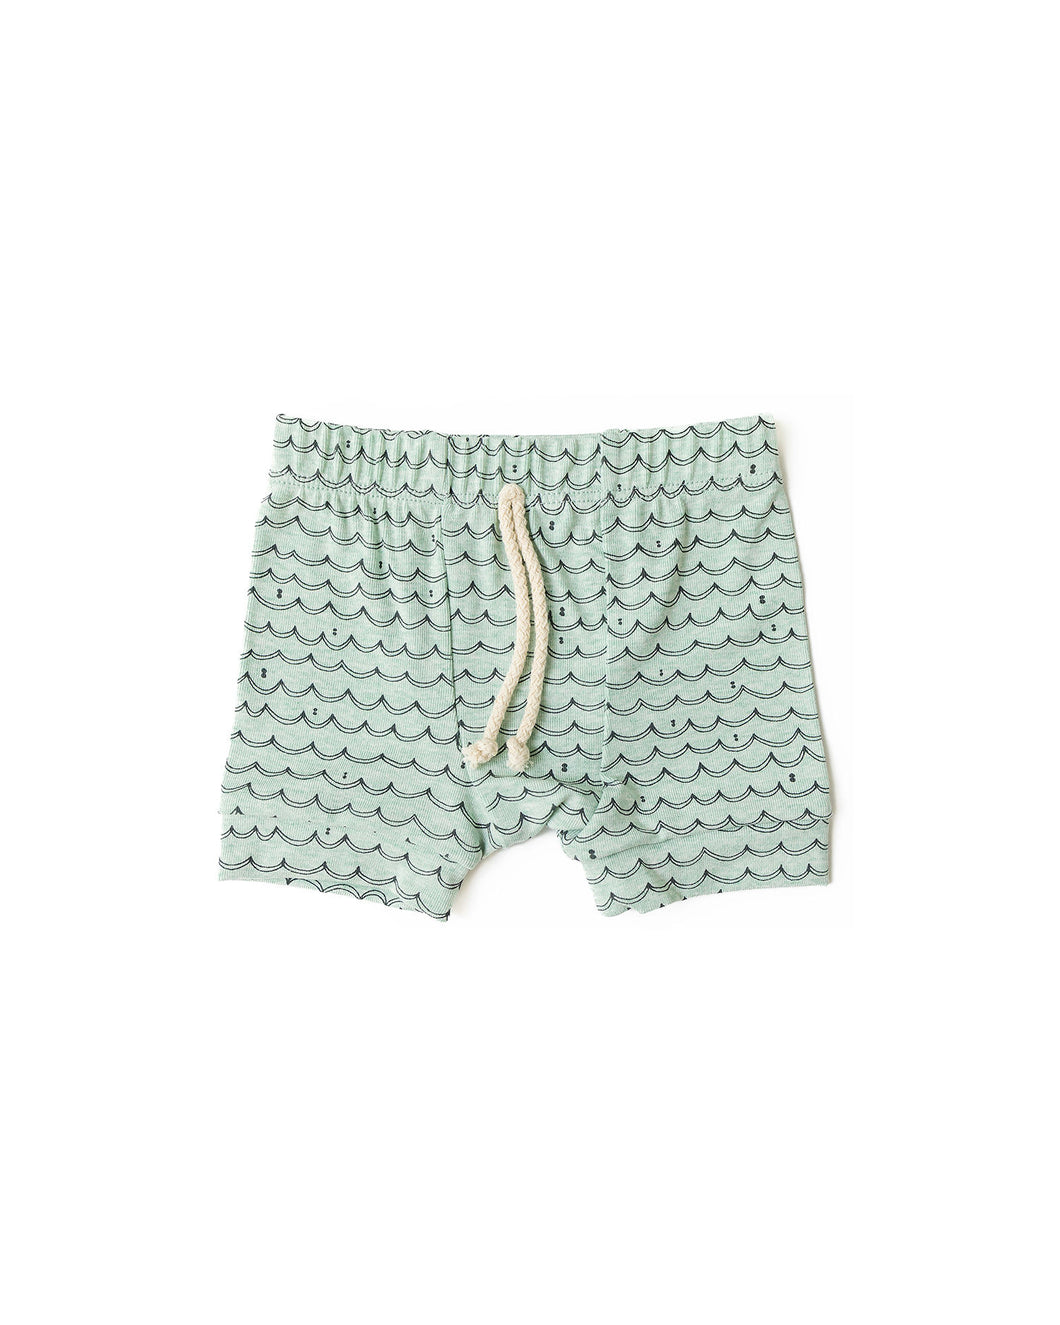 rib knit shorts - waves on caribbean